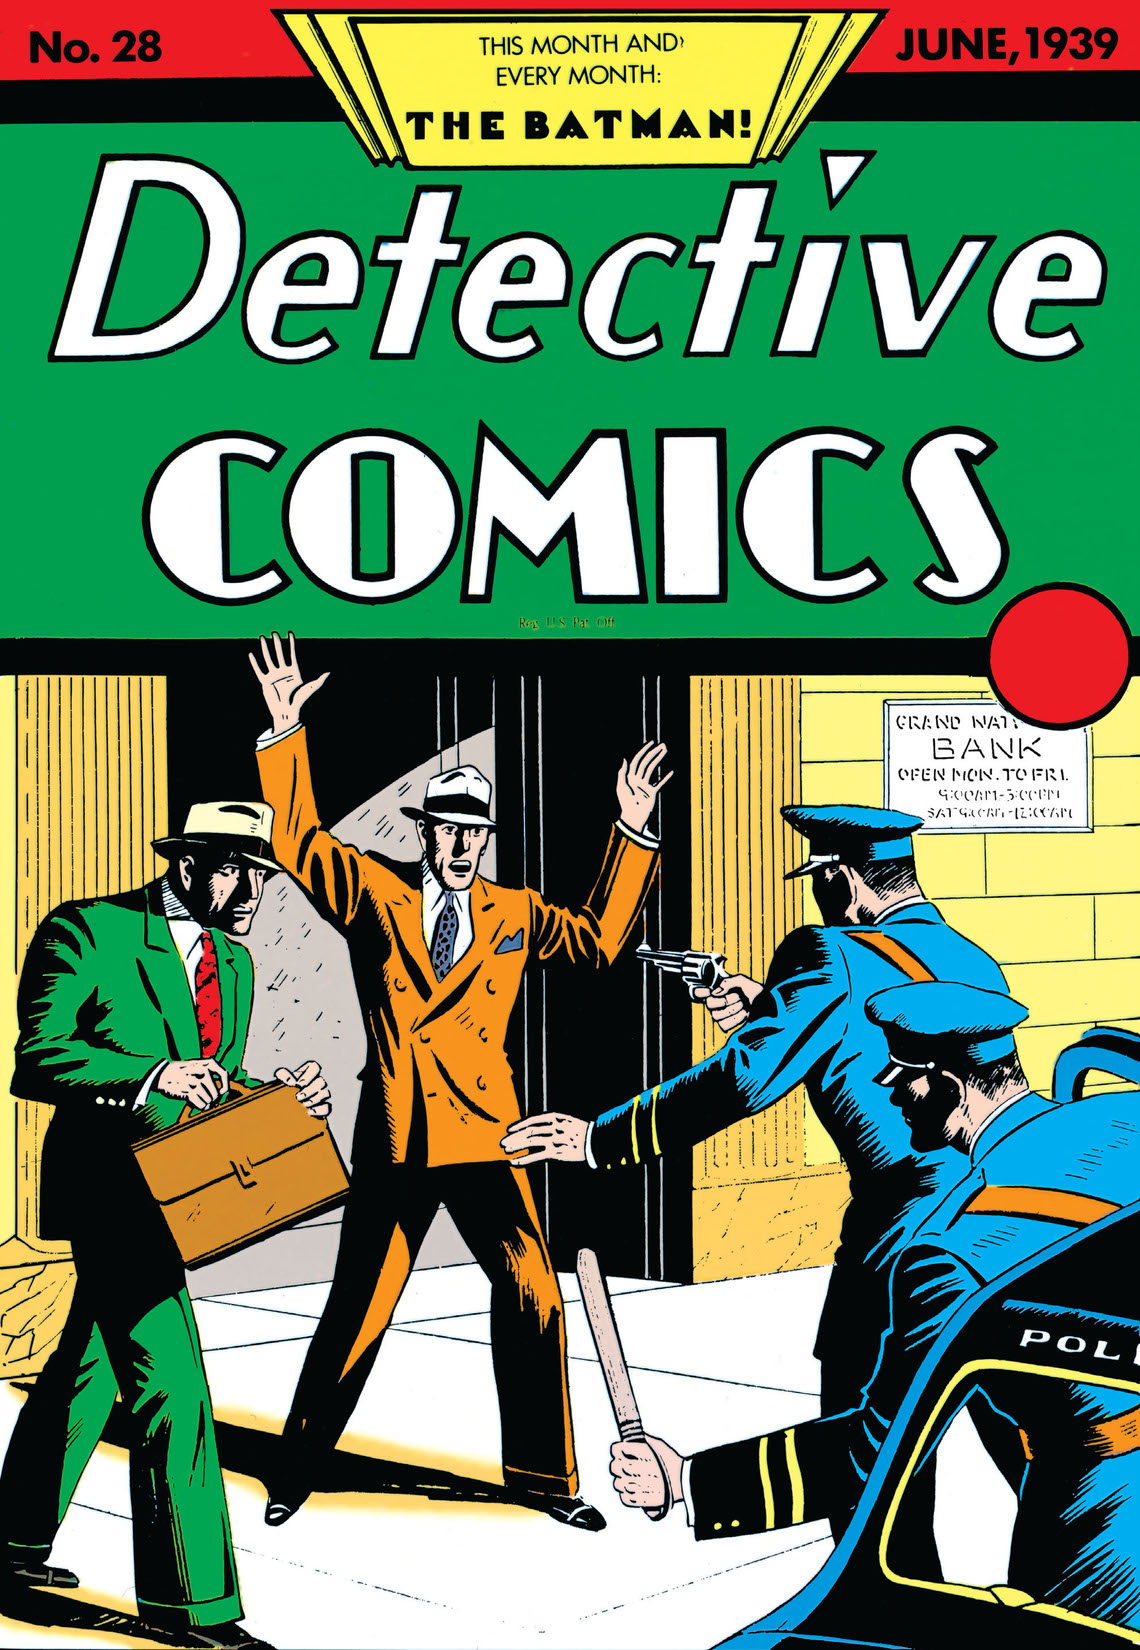 Detective Comics (1937-) #28 preview images